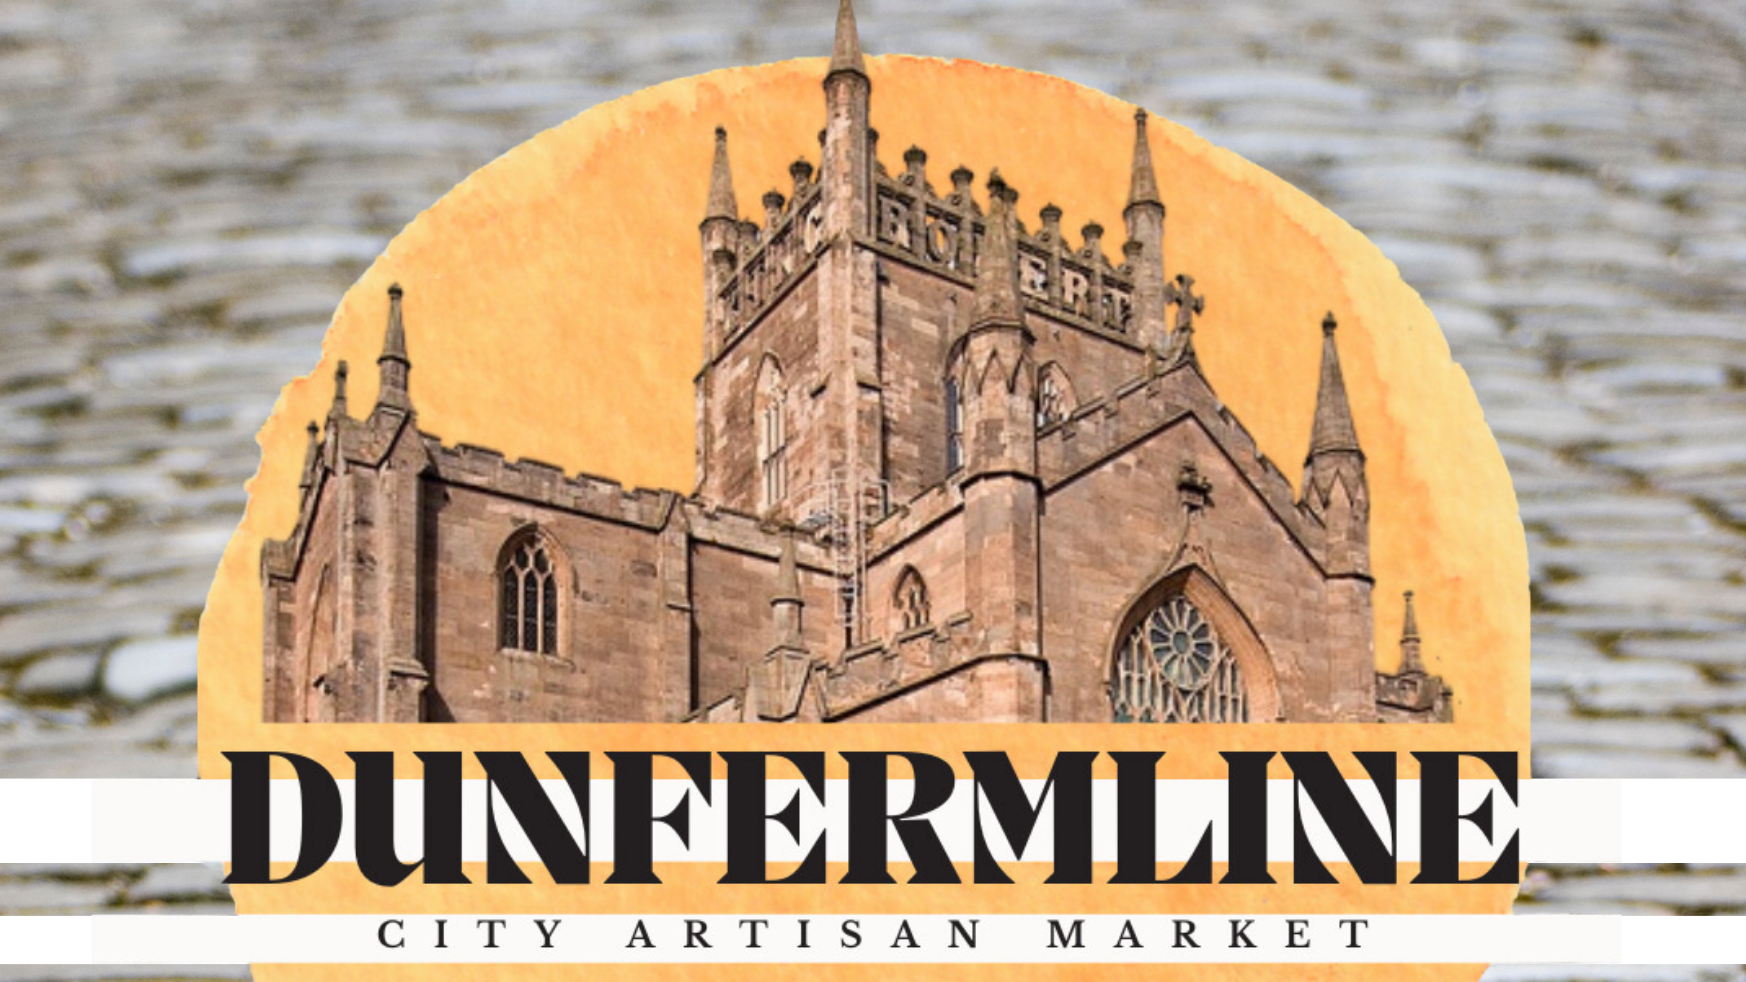 Dunfermline City Artisan Market - October